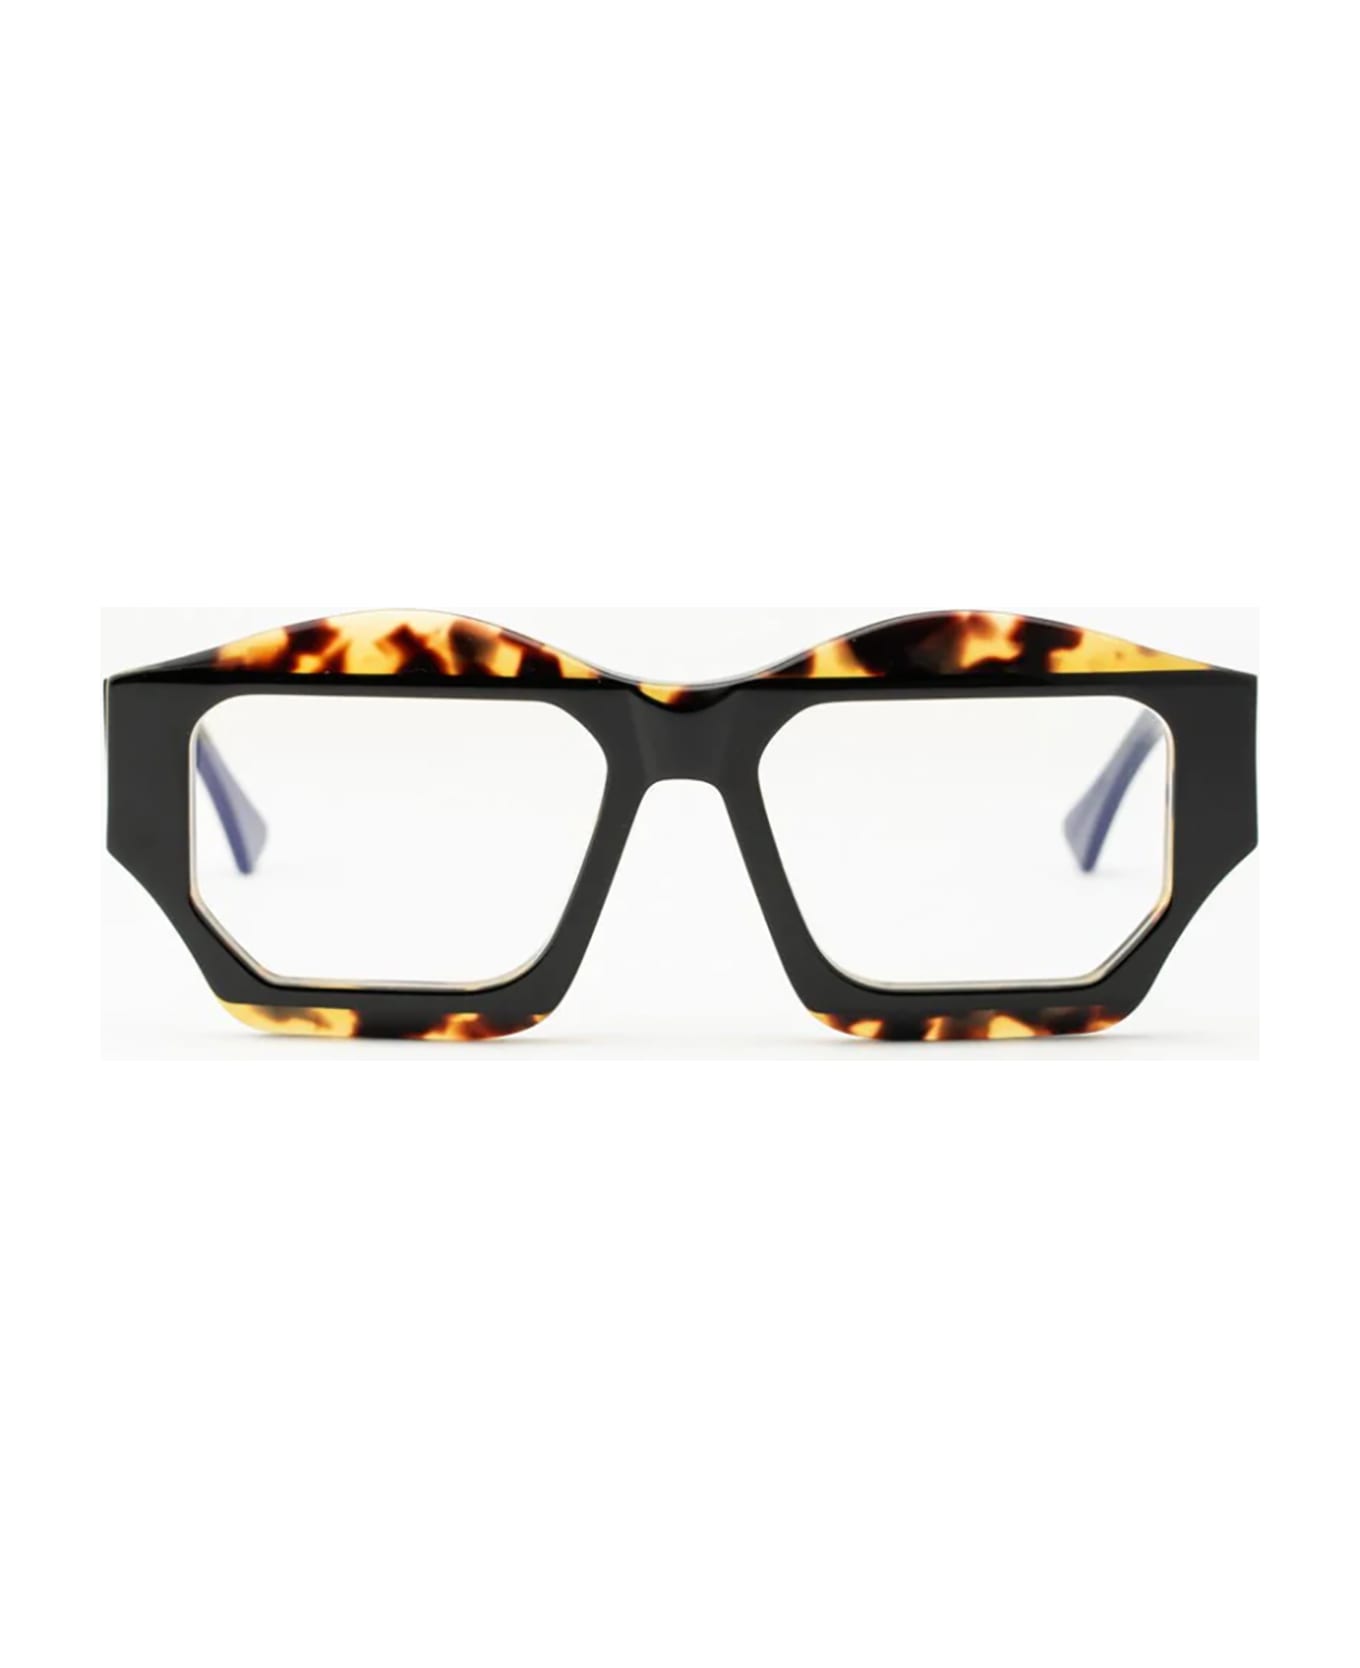 Kuboraum F4 Eyewear - Hbs アイウェア